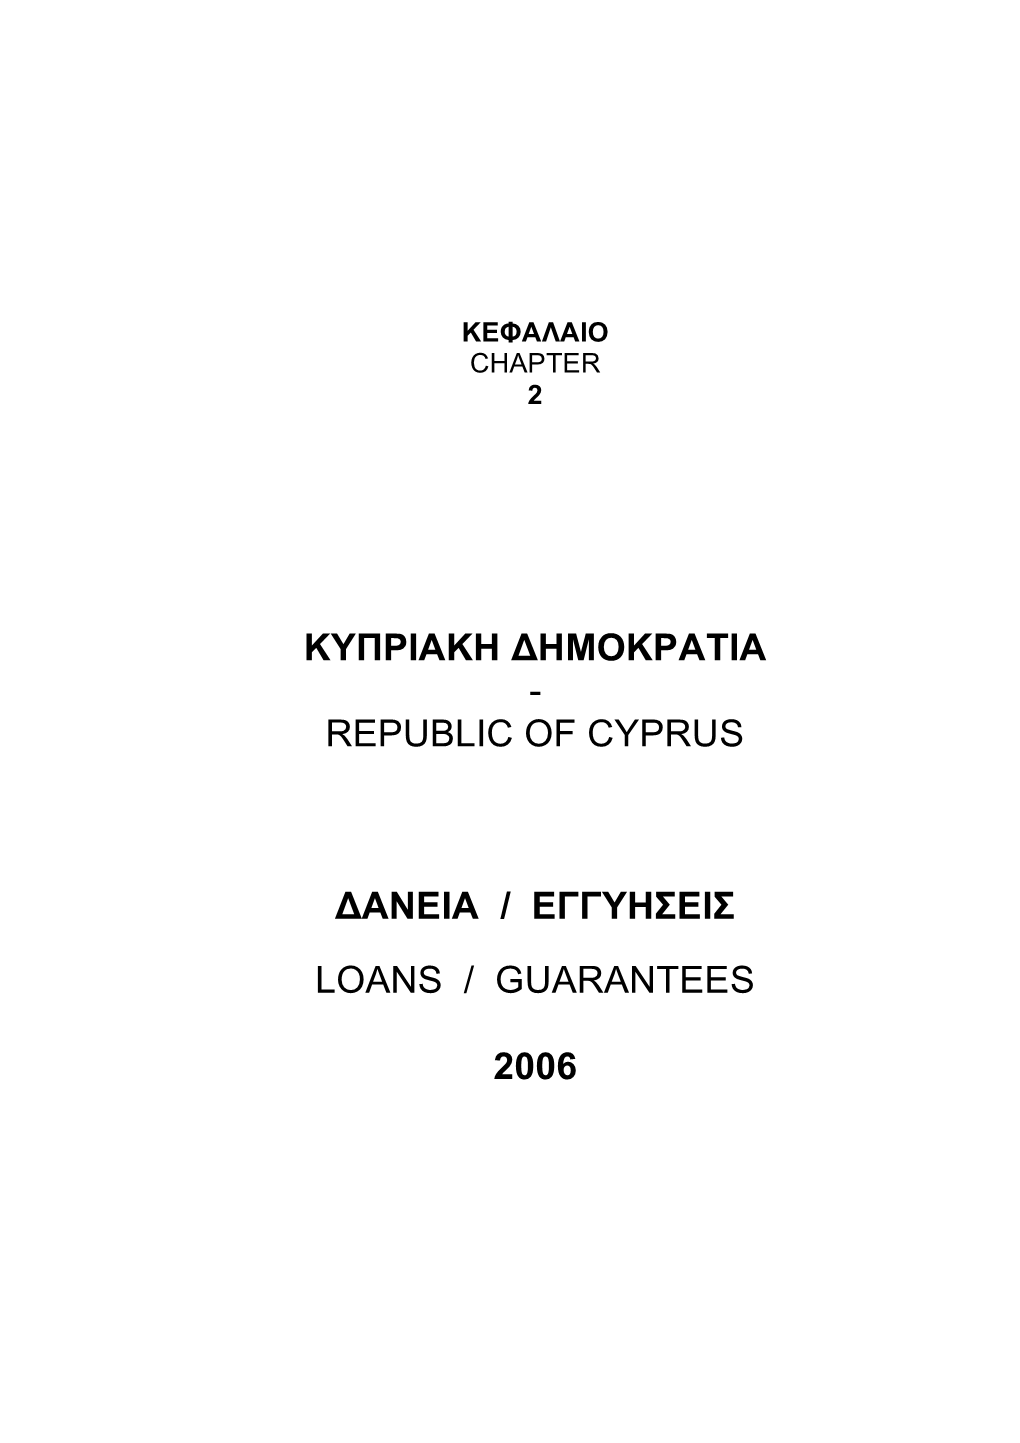 Republic of Cyprus ∆Aneia / Eγγyhσeiσ Loans